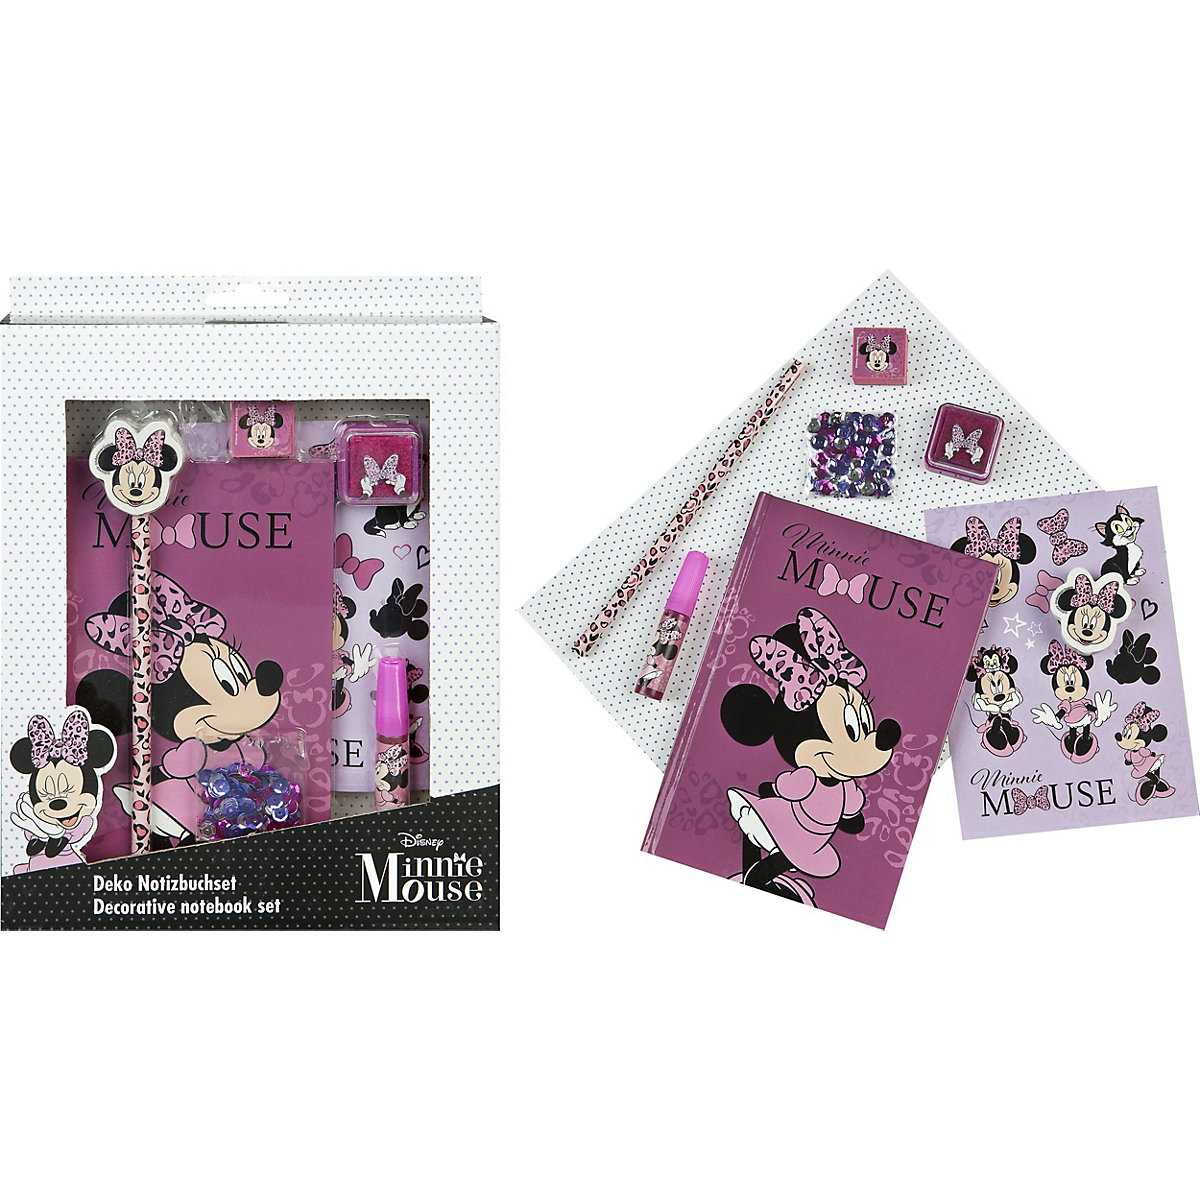 Deko Notizbuchset Disney Minnie Mouse 8-tlg.